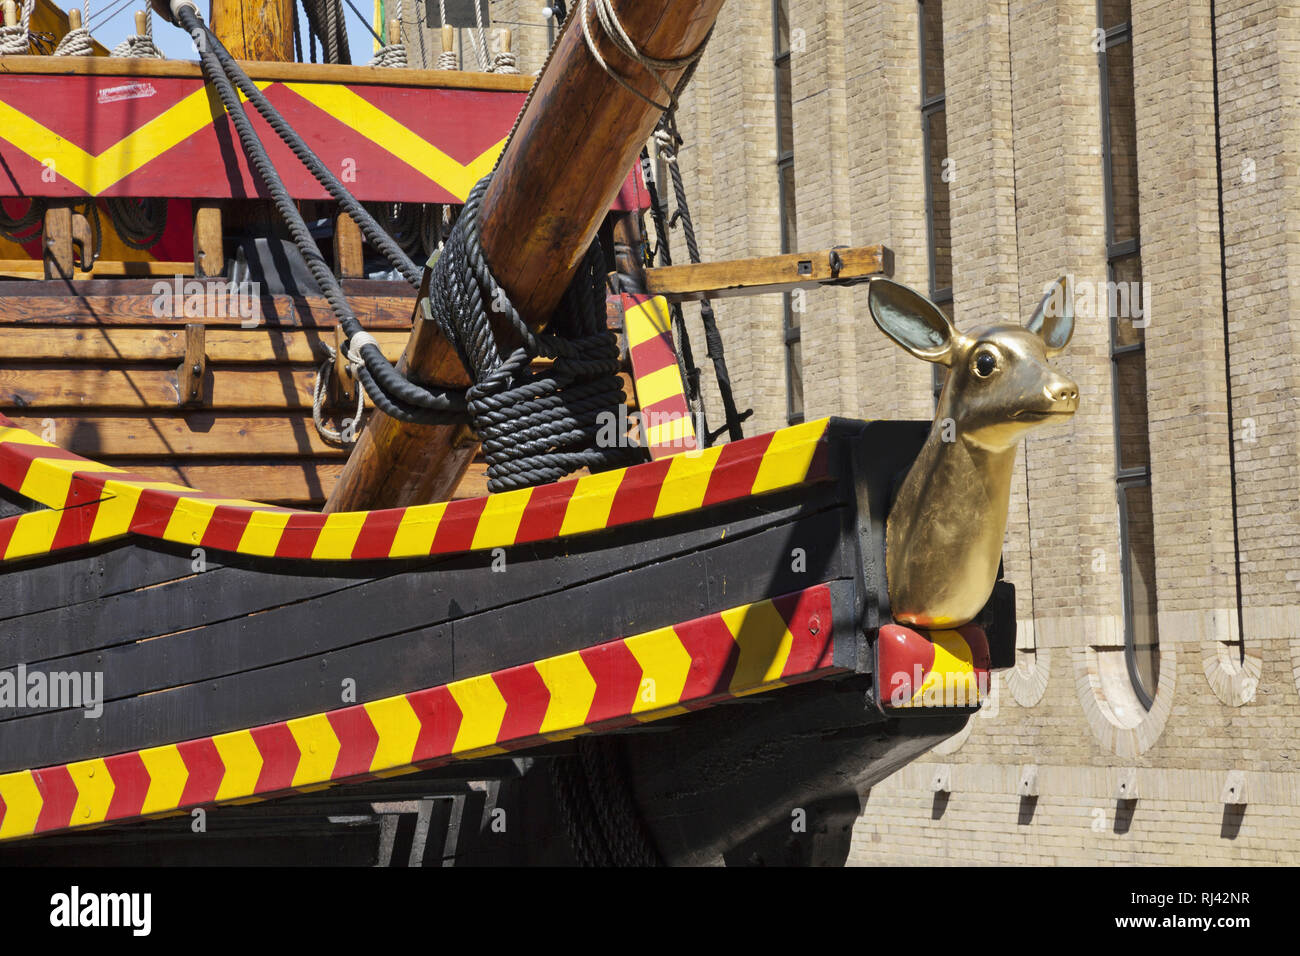 England, London, Southwark, historisches Segelschiff 'Golden Hinde', Stock Photo